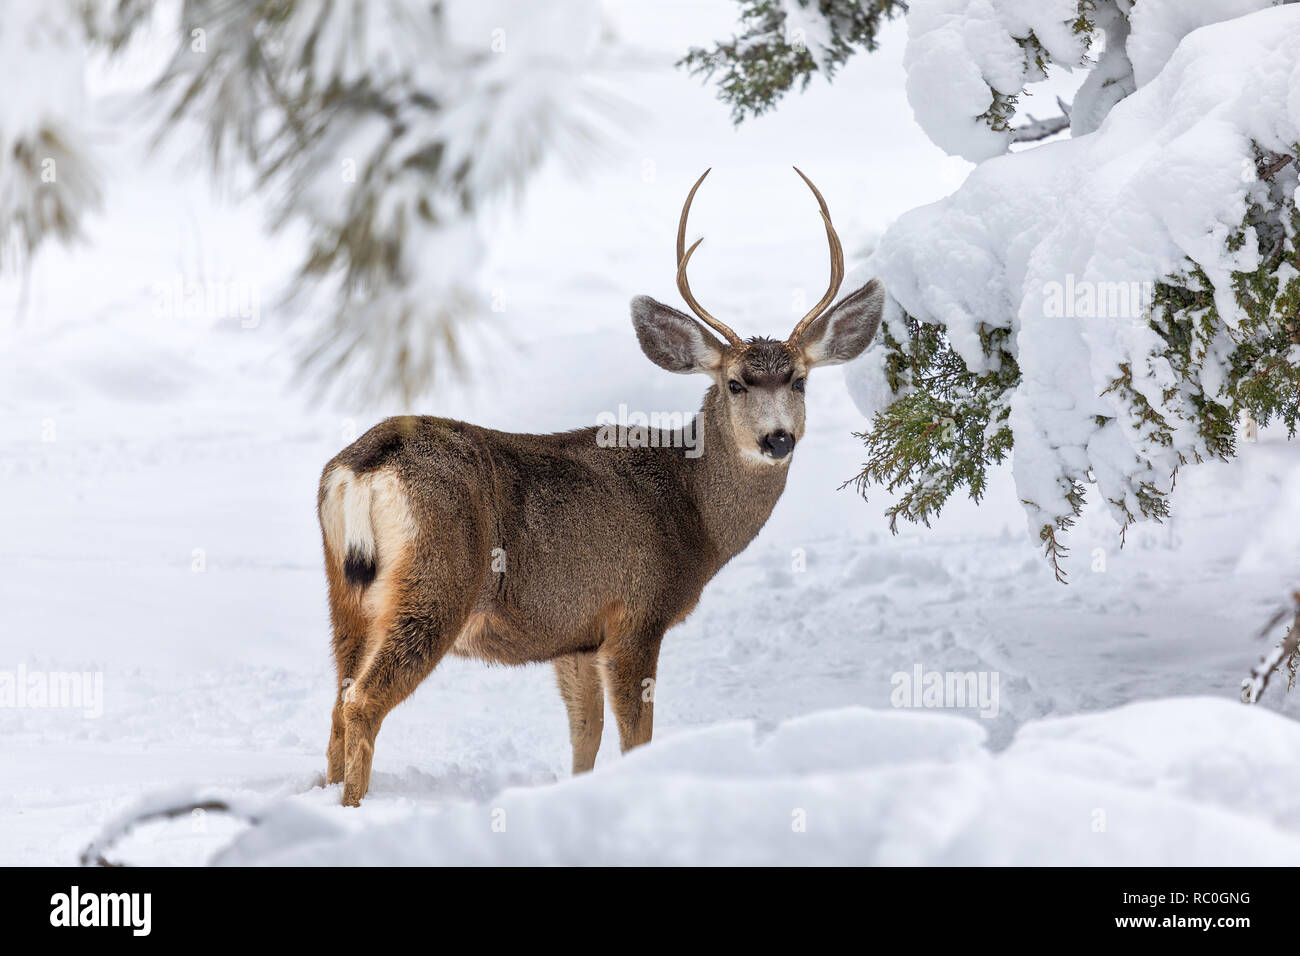 Mule deer buck (Odocoileus hemionus) in winter forest with snow Stock Photo